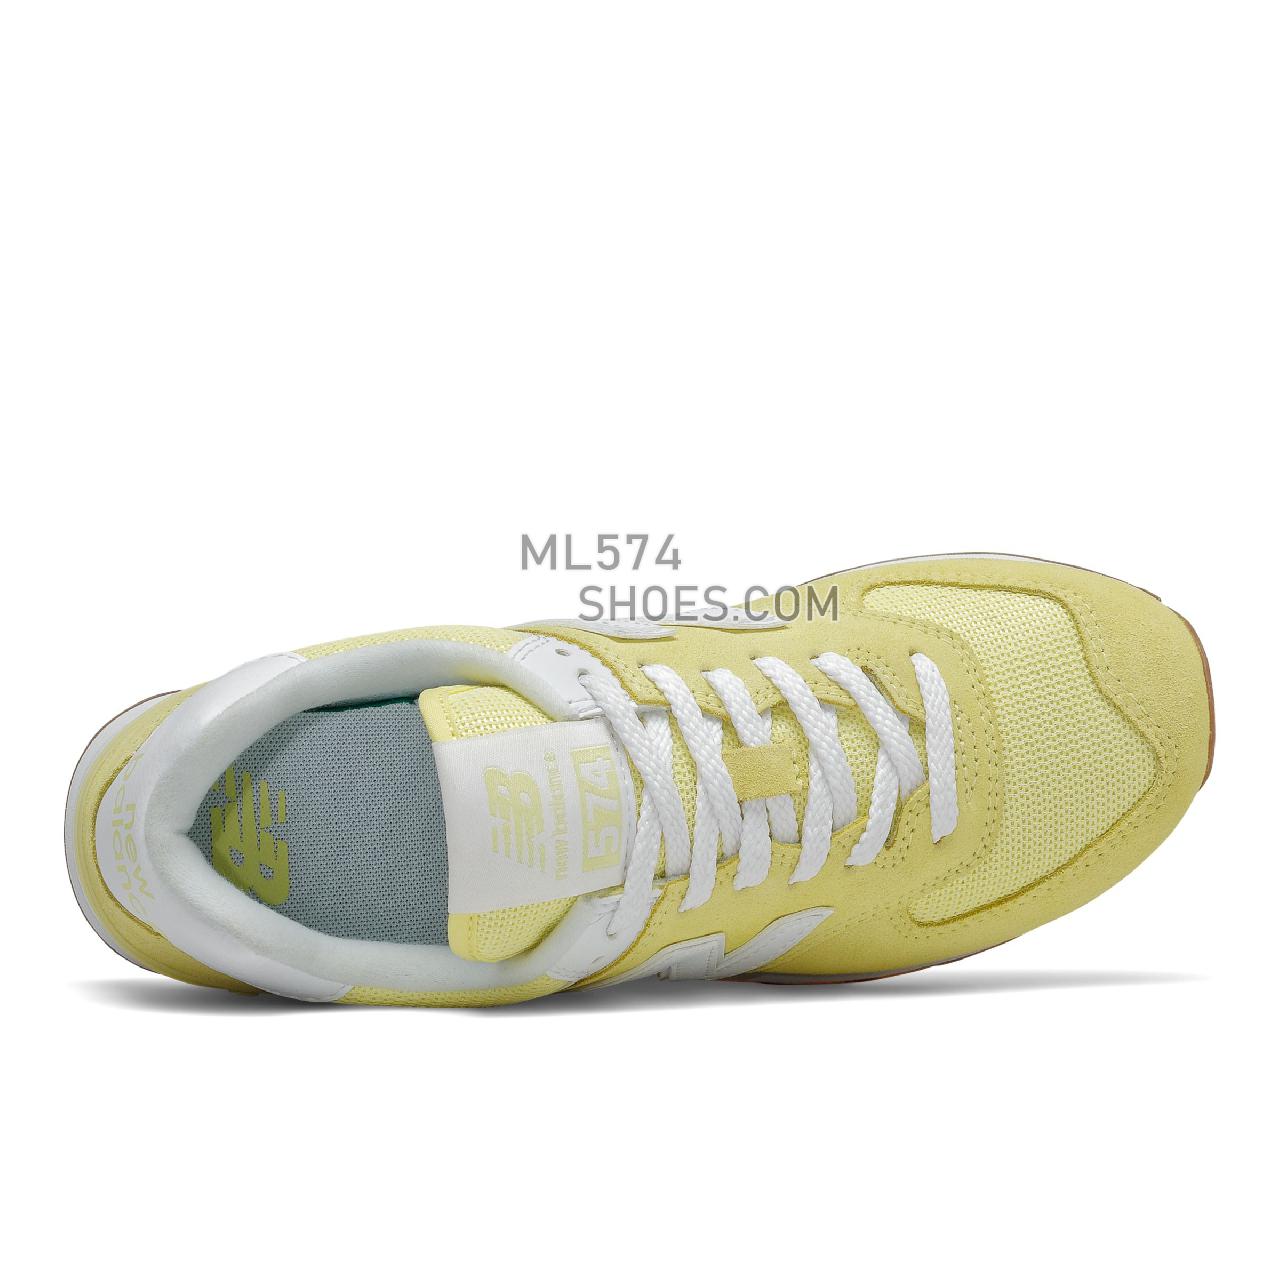 New Balance 574 - Women's Classic Sneakers - Lemon Haze with White - WL574PK2